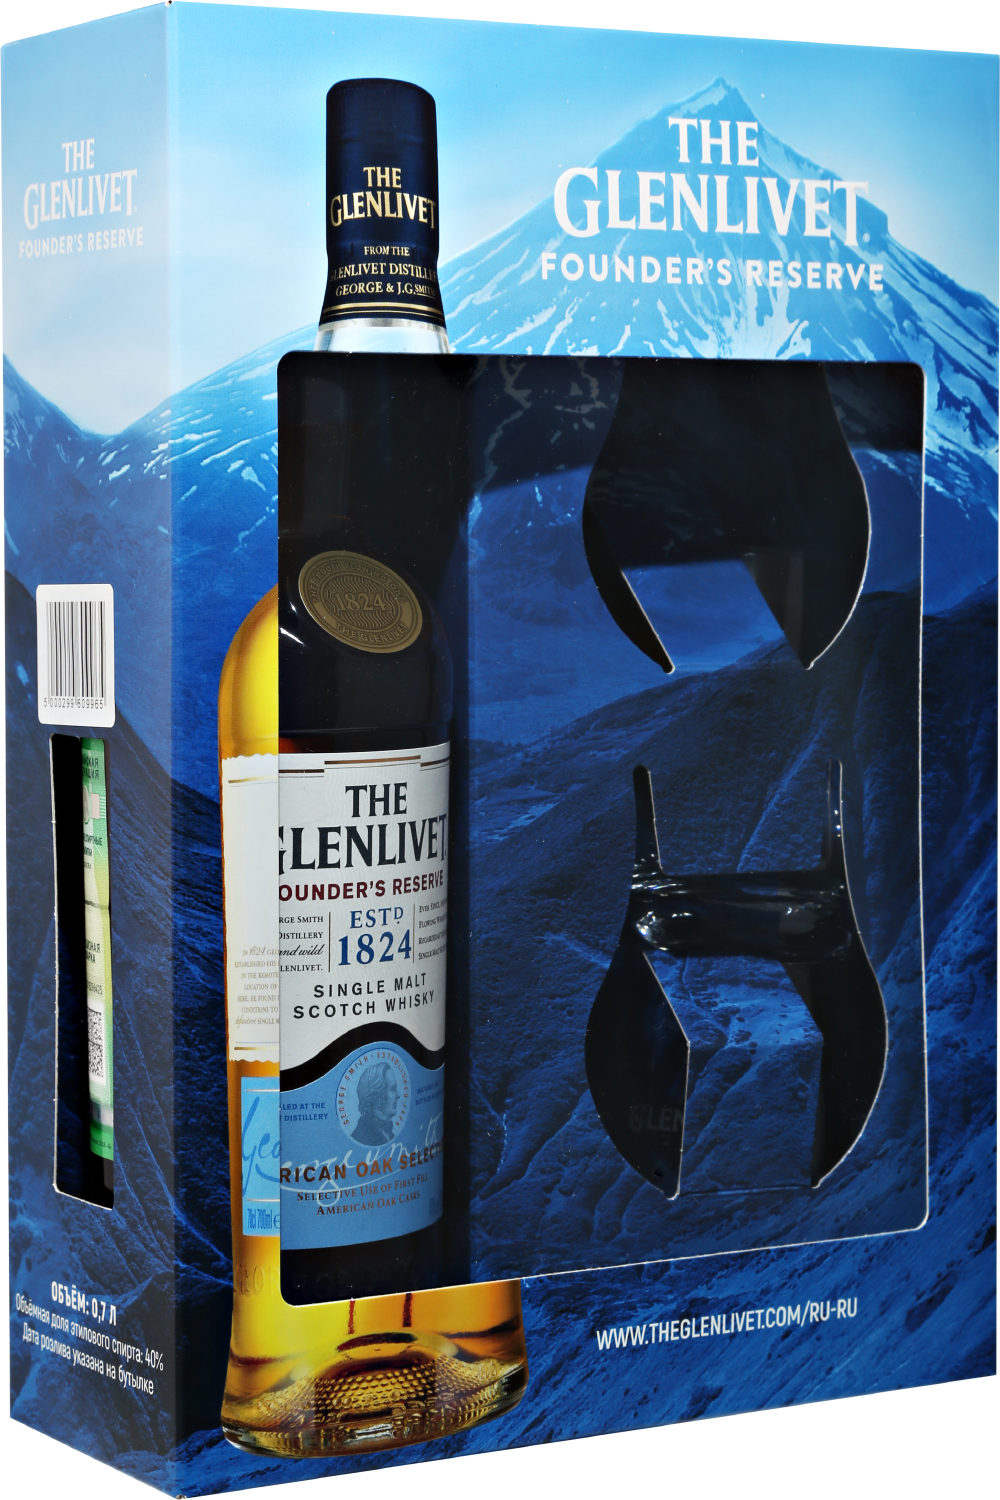 The Glenlivet Founder's Reserve Single Malt Scotch Whisky (gift box with 2 glasses) glenfiddich single malt scotch whisky 12 y o gift box with 2 glasses